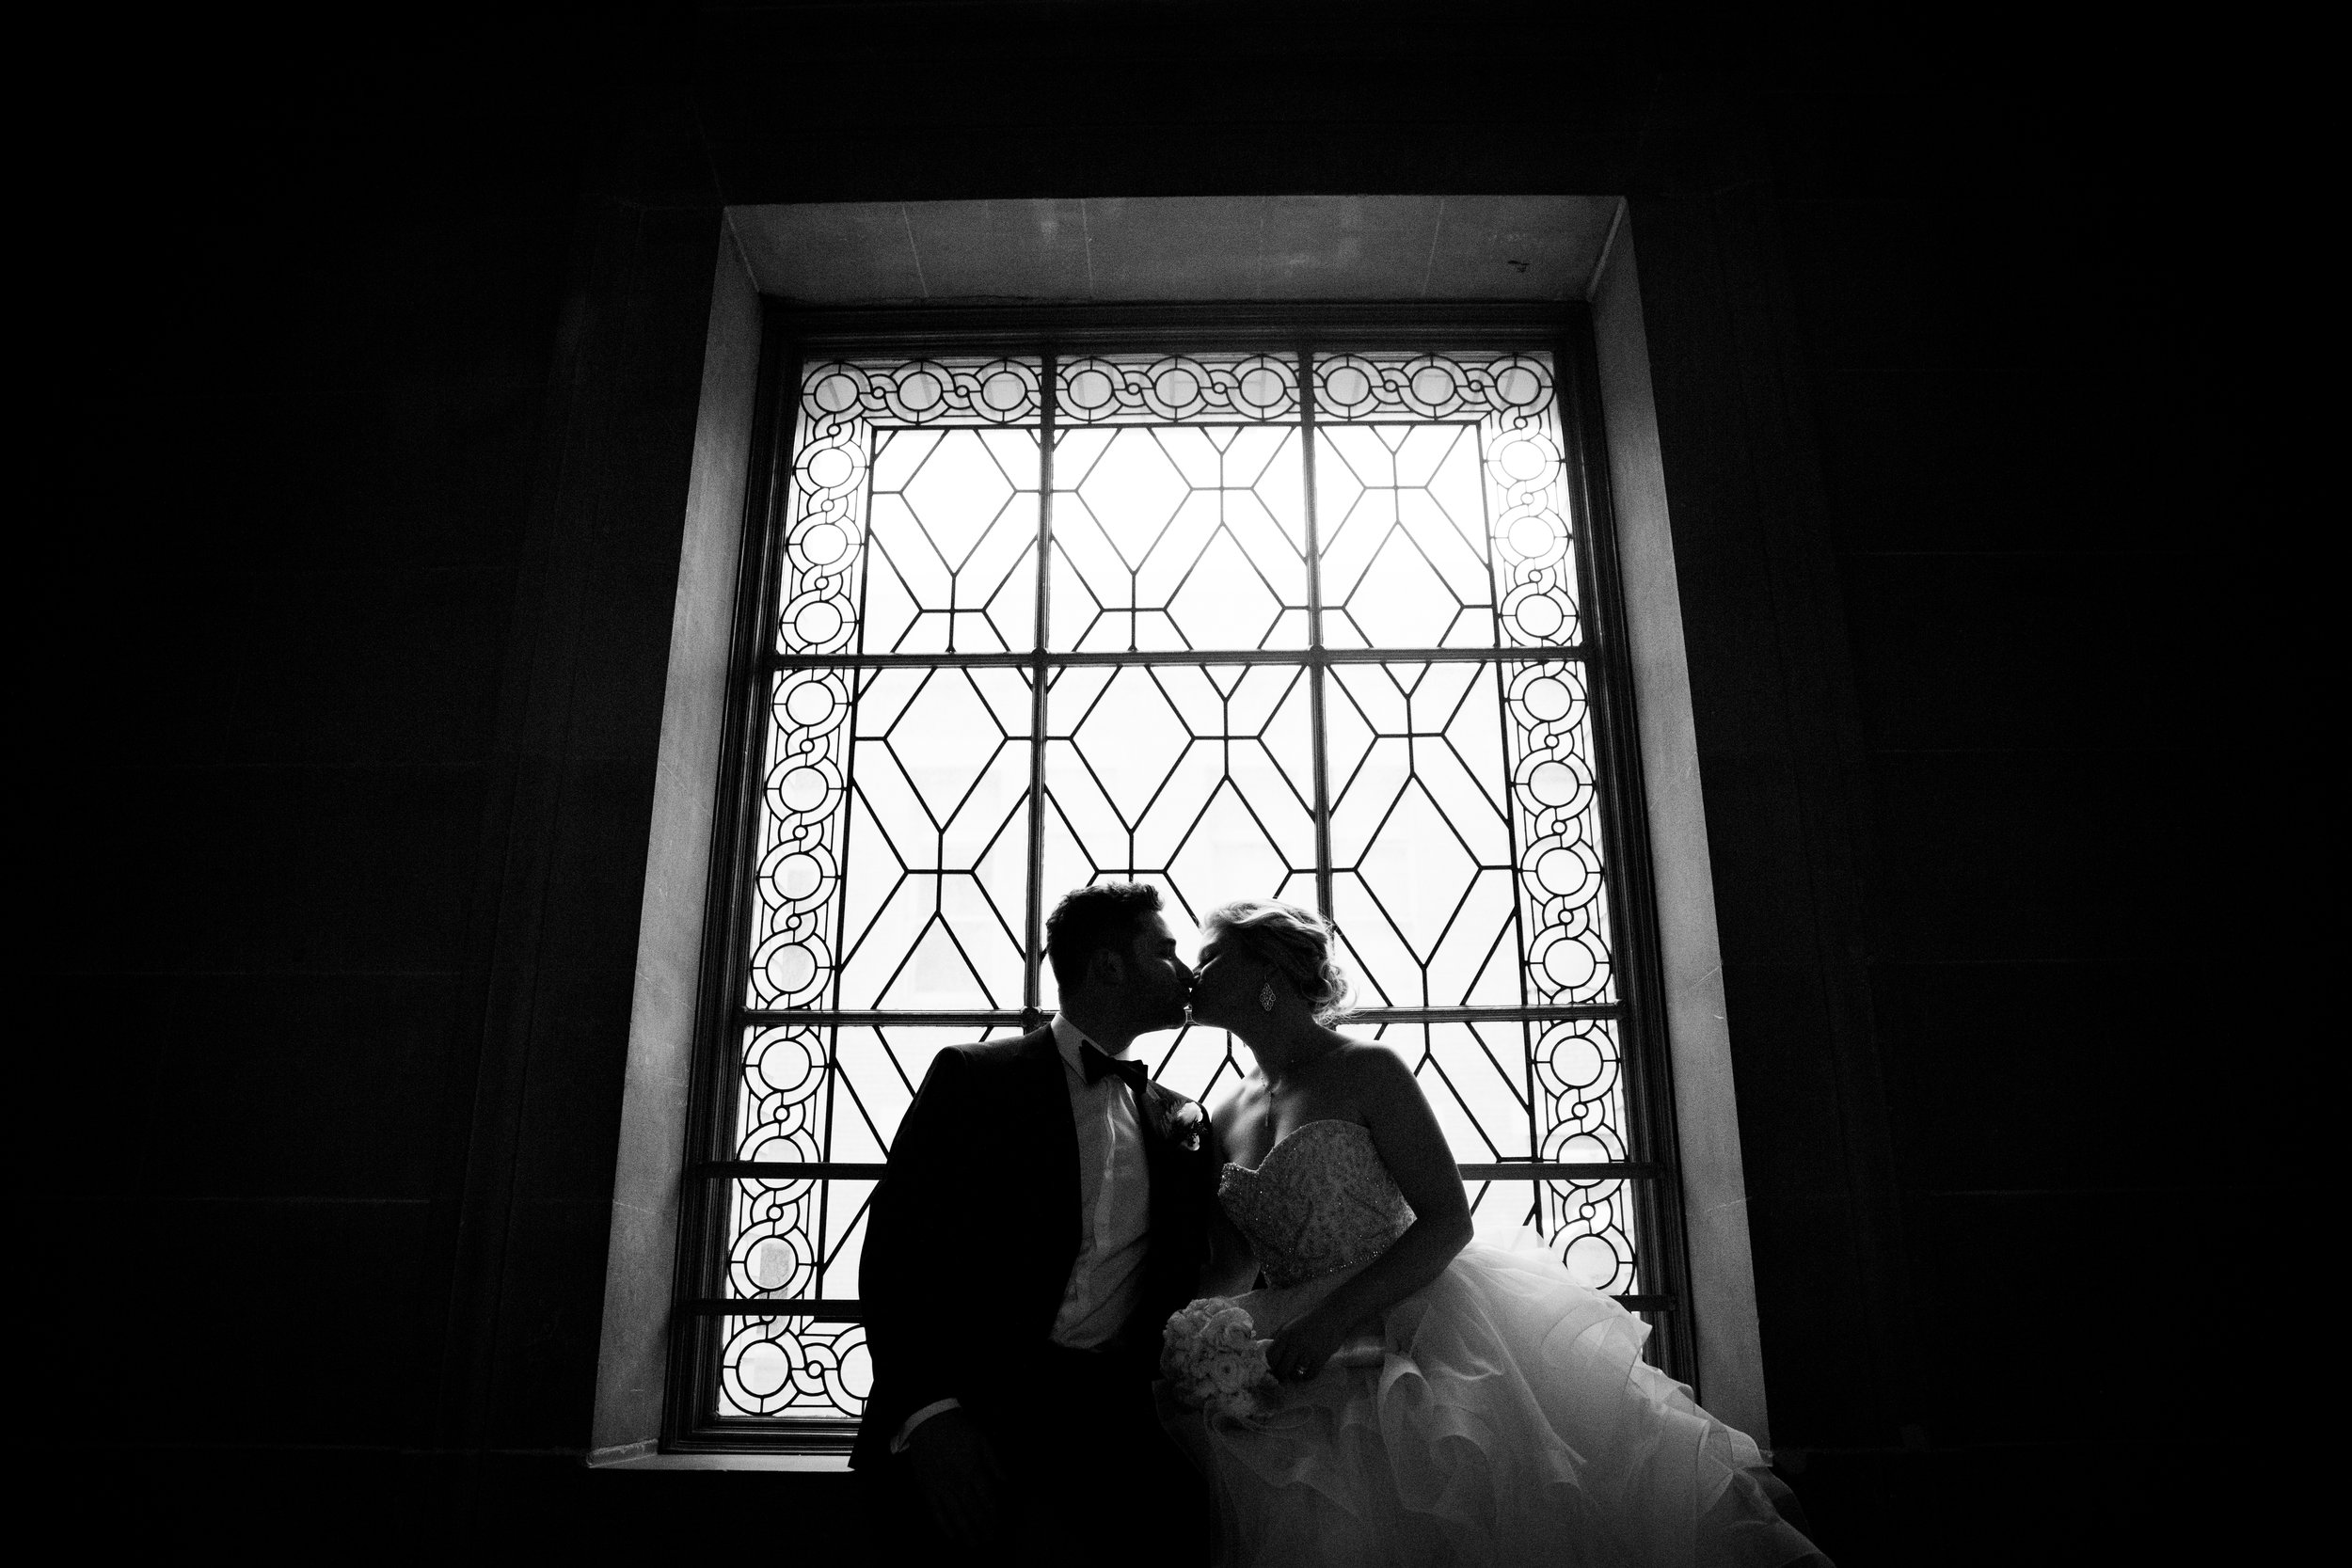 009_janaeshieldsphotography_sanfrancisco_cityhall_weddings.jpg